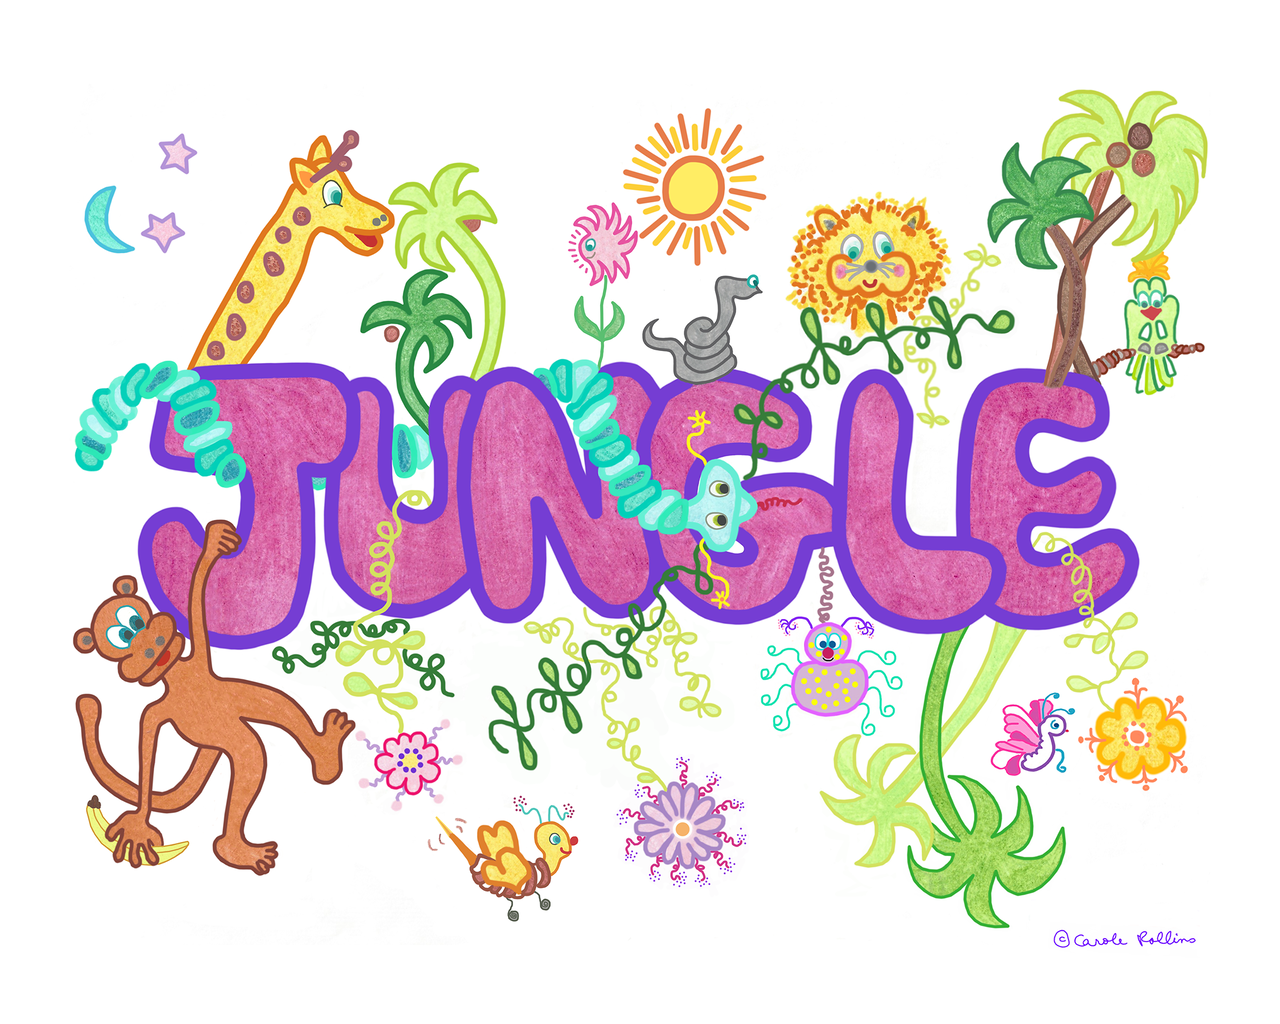 "Jungle" Design